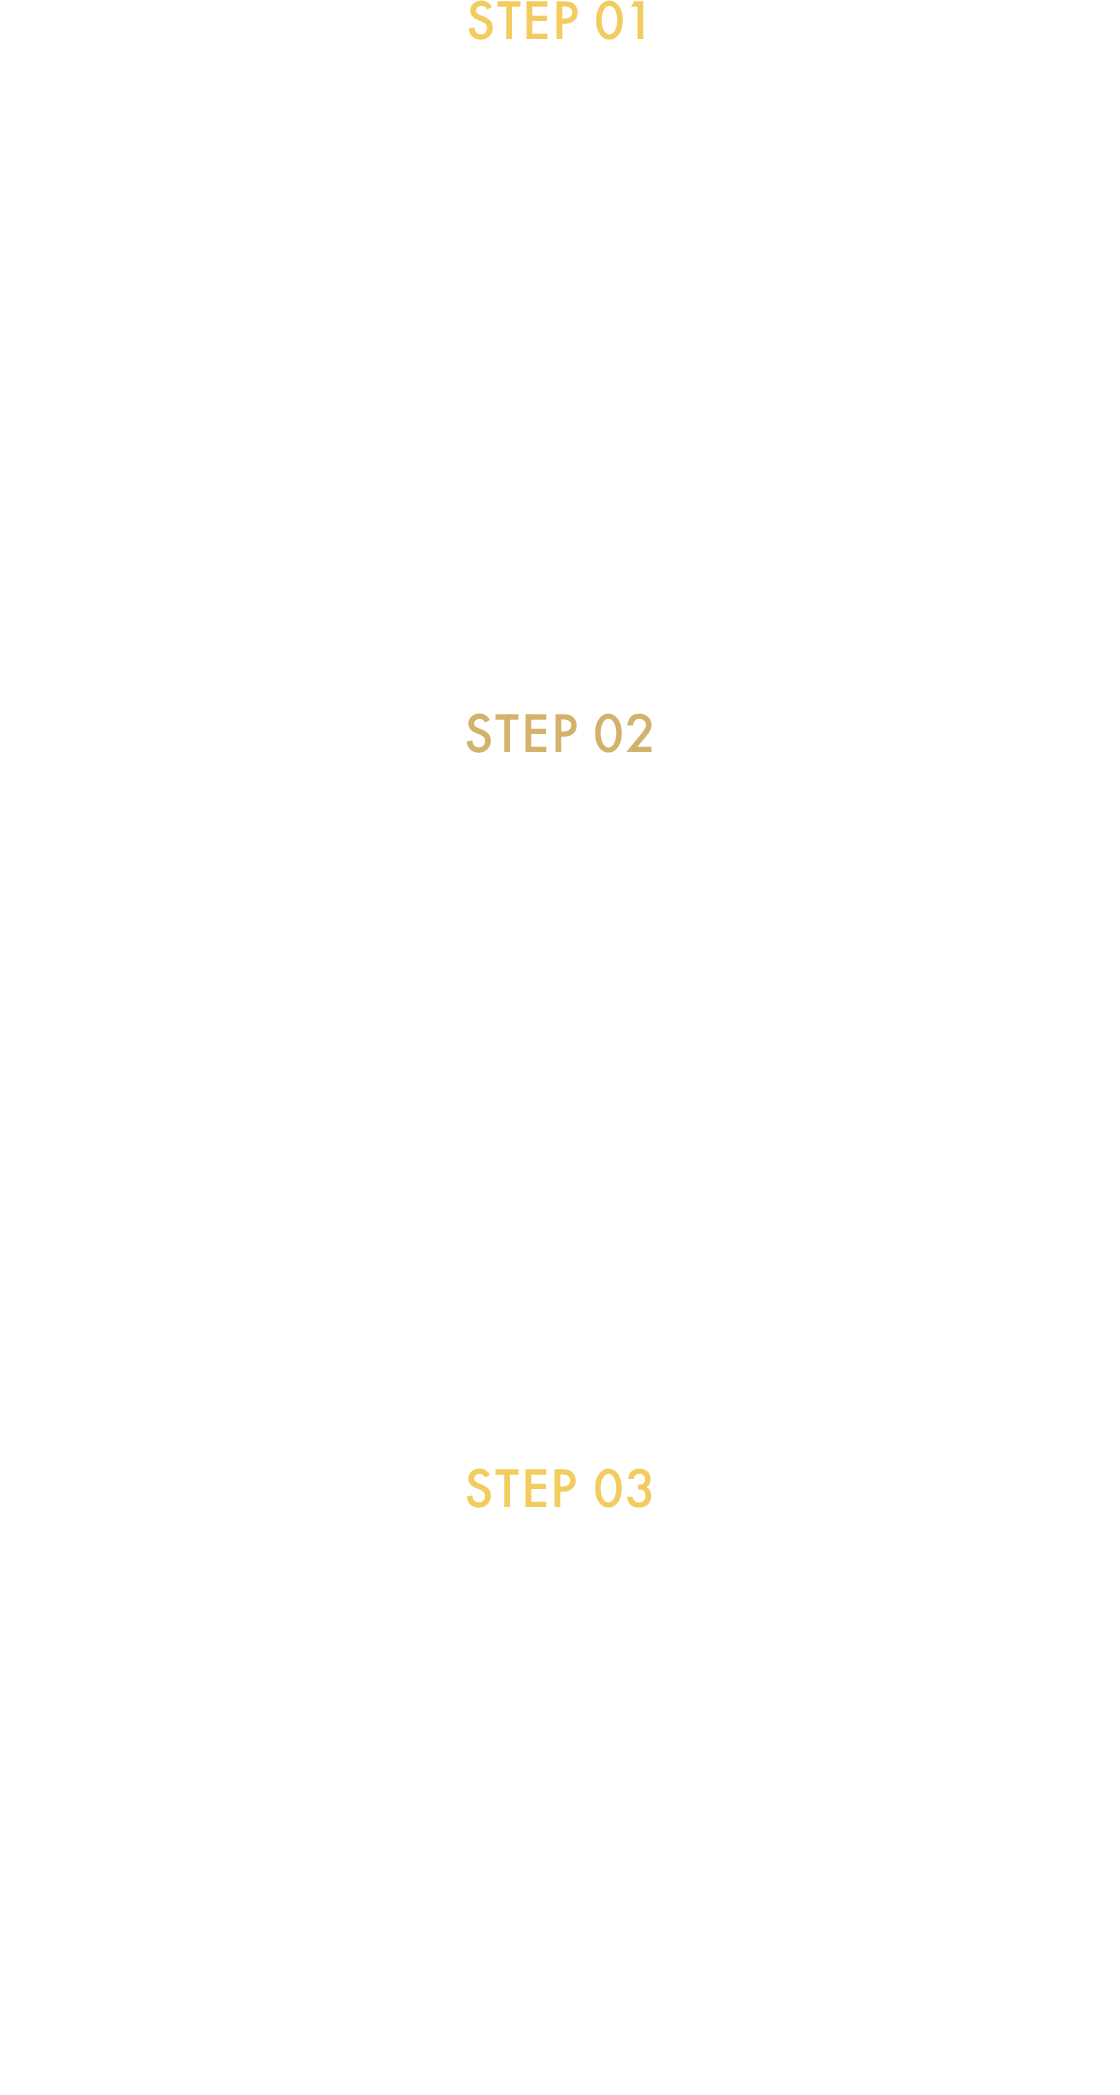 STEP01 物件エントリー｜STEP02 パスワード発行｜STEP03 限定情報の閲覧